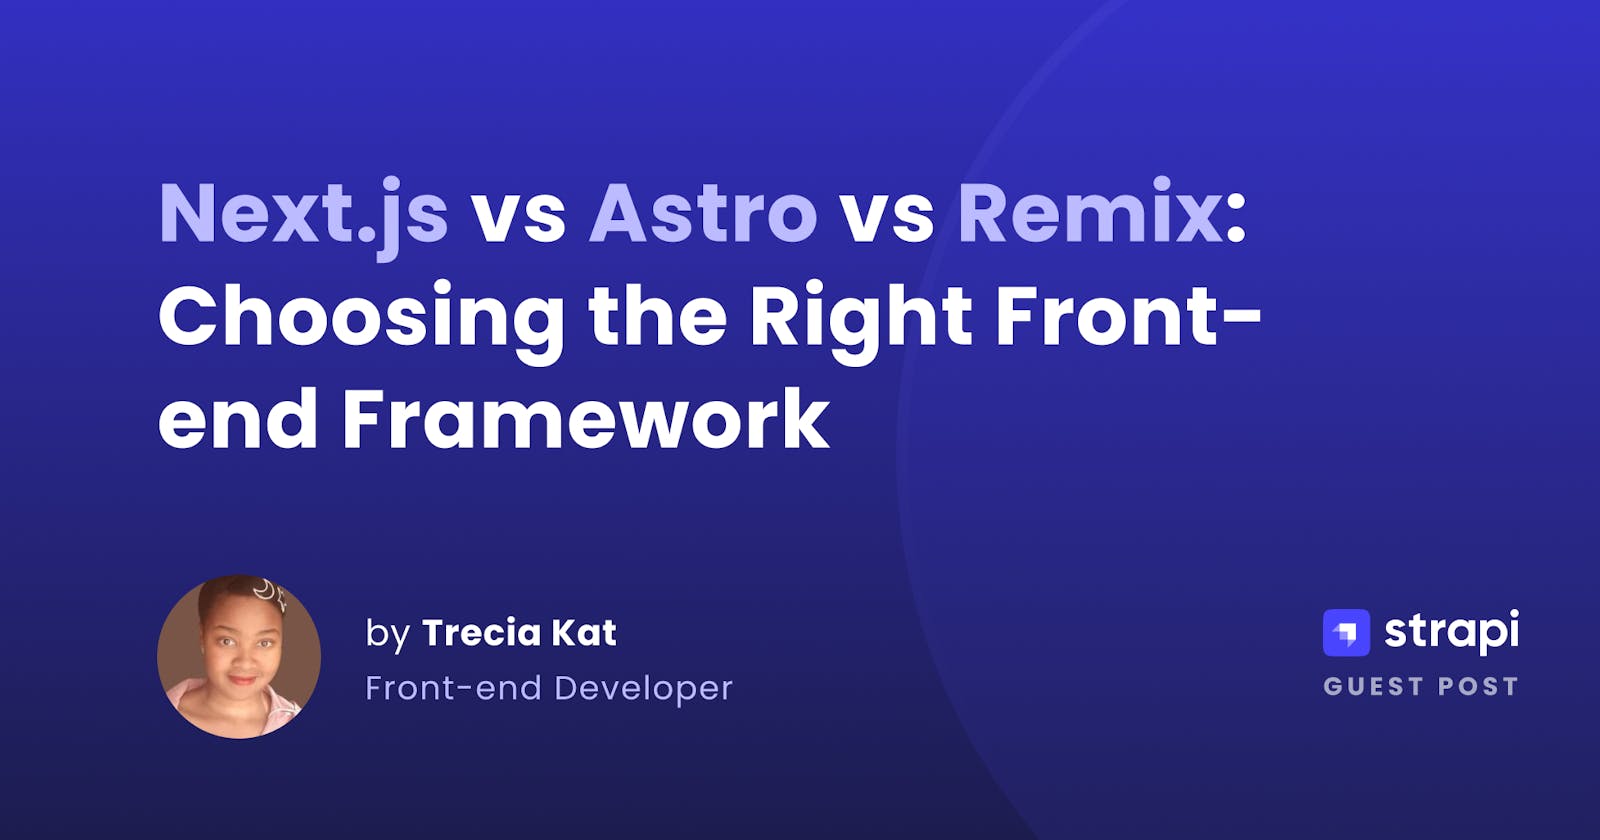 Next.js vs Astro vs Remix: Choosing the Right Front-end Framework